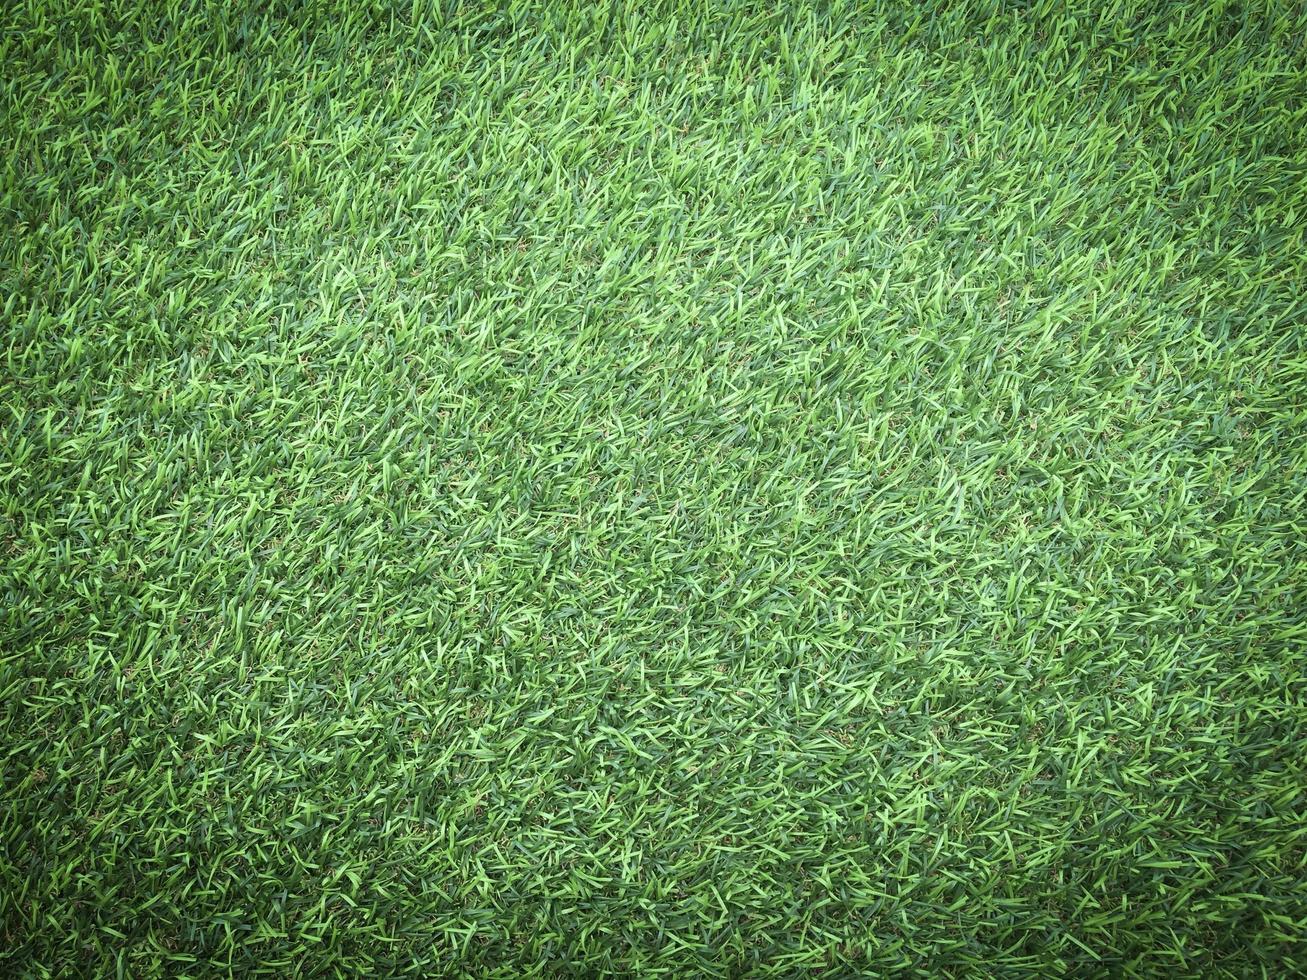 detailopname visie van groen gras voetbal veld- achtergrond. behang voor werk en ontwerp. foto